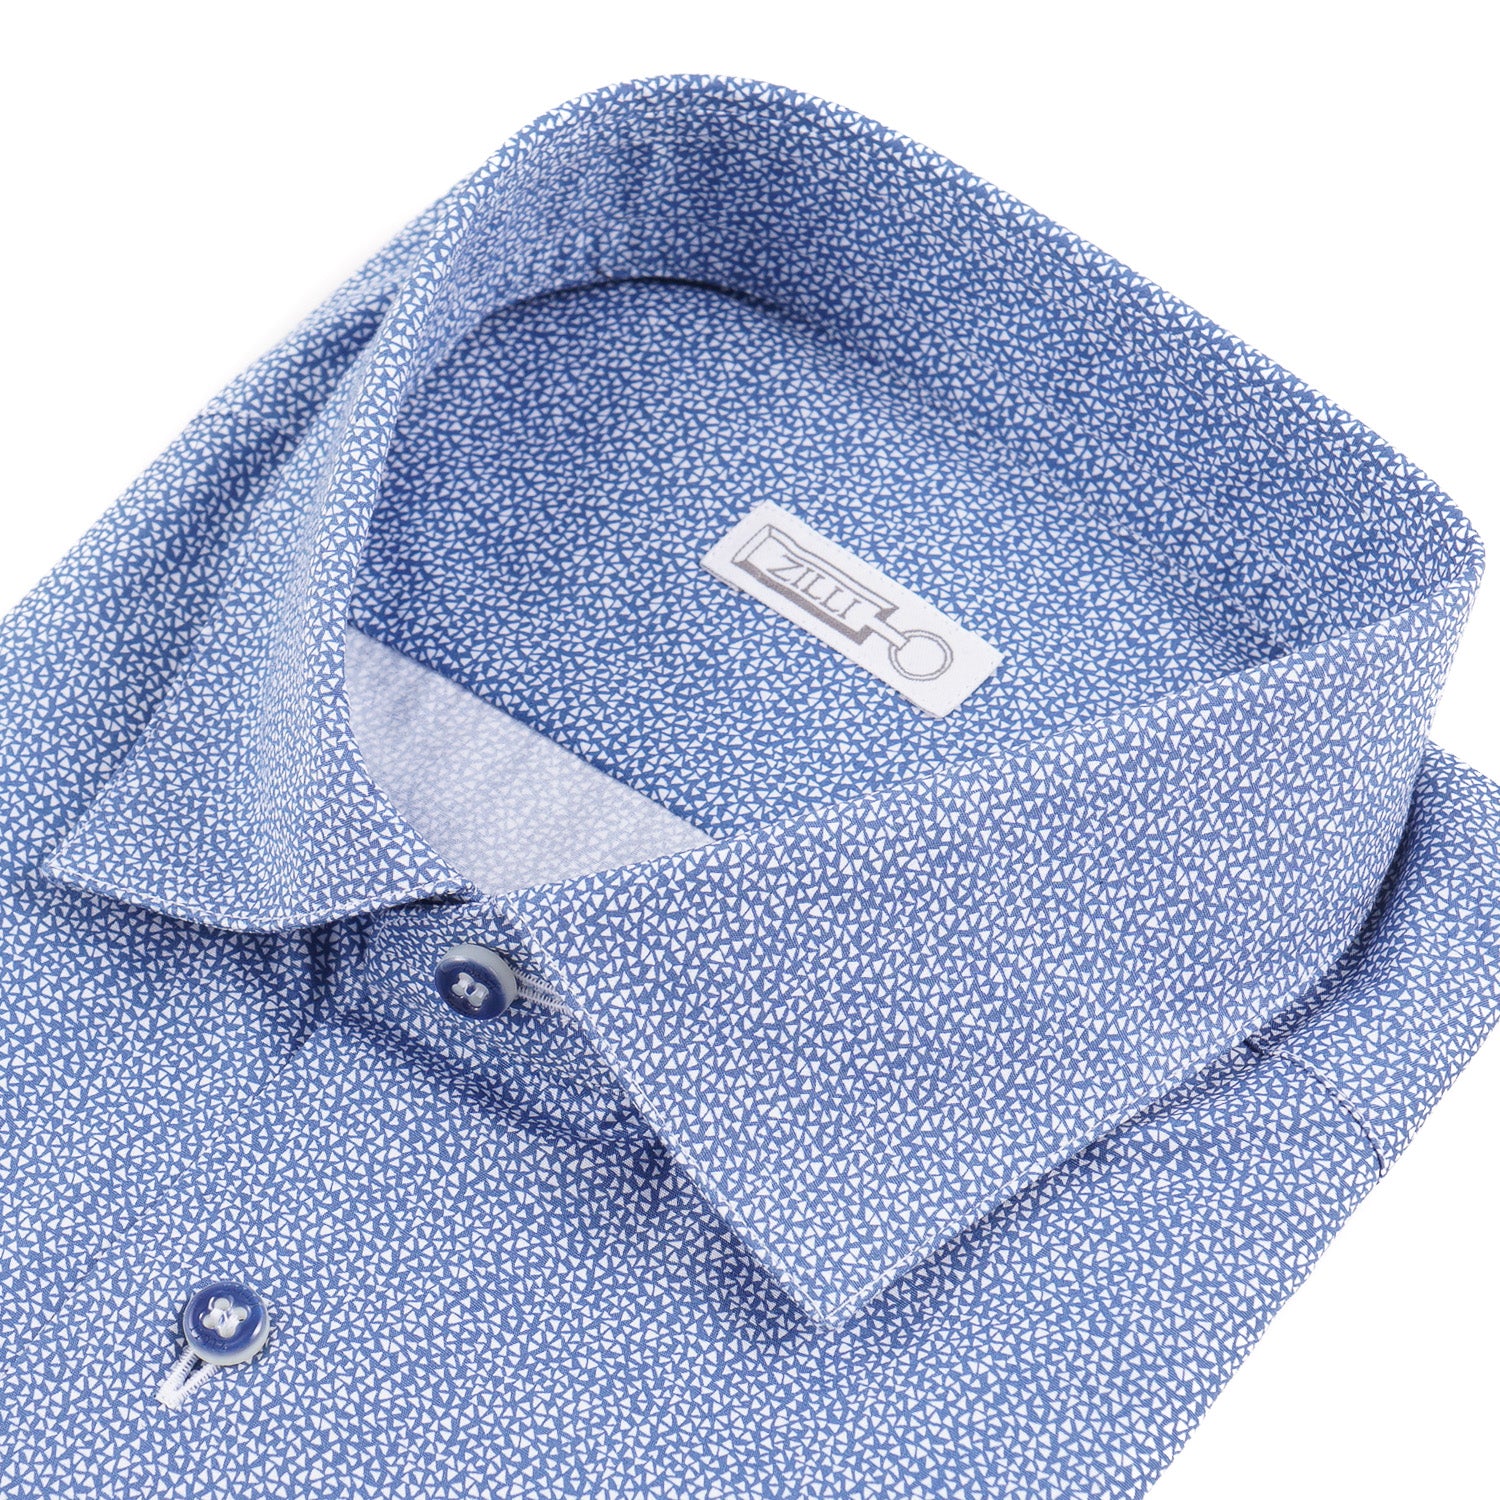 Zilli Tailored-Fit Shirt with Geometric Print - Top Shelf Apparel